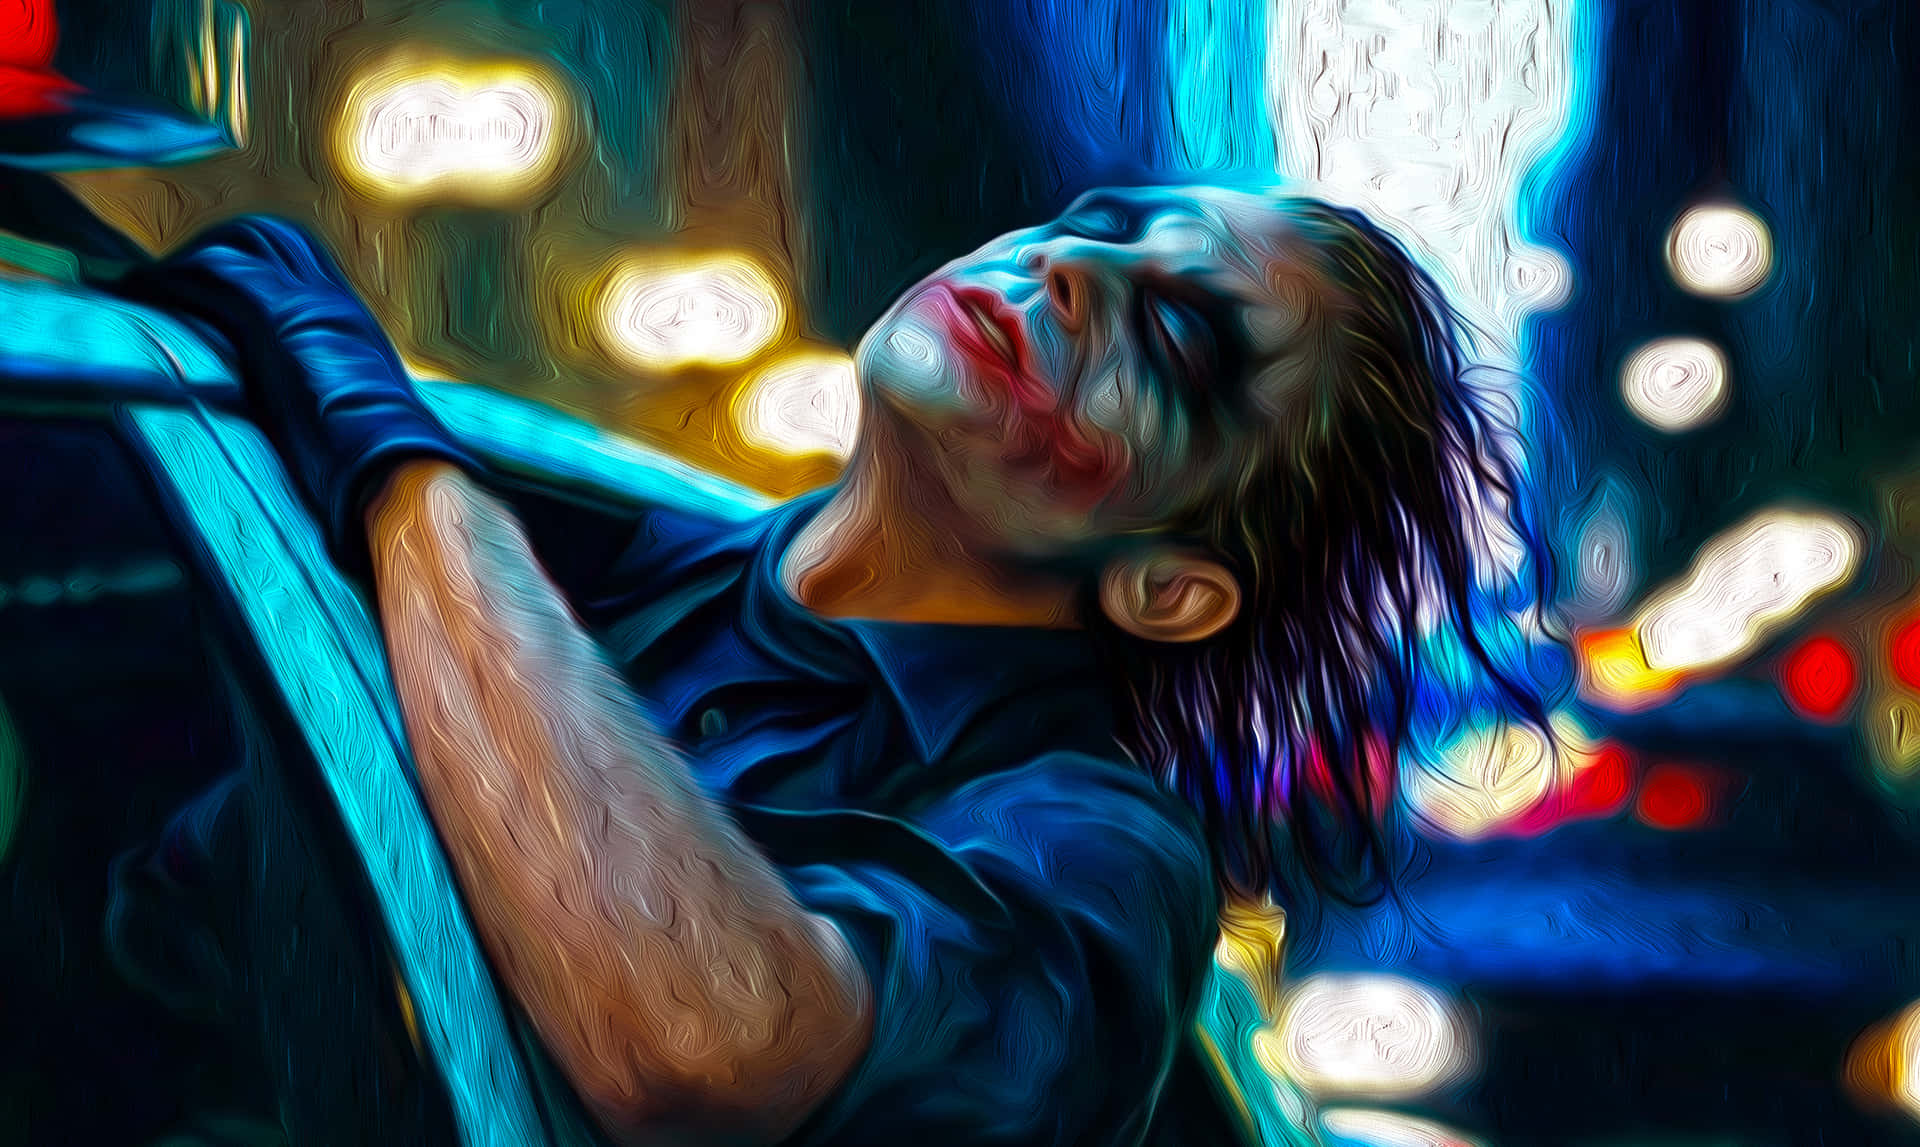 Lapintura Del Joker - Impresión De Arte Fina De La Pintura Del Joker Fondo de pantalla